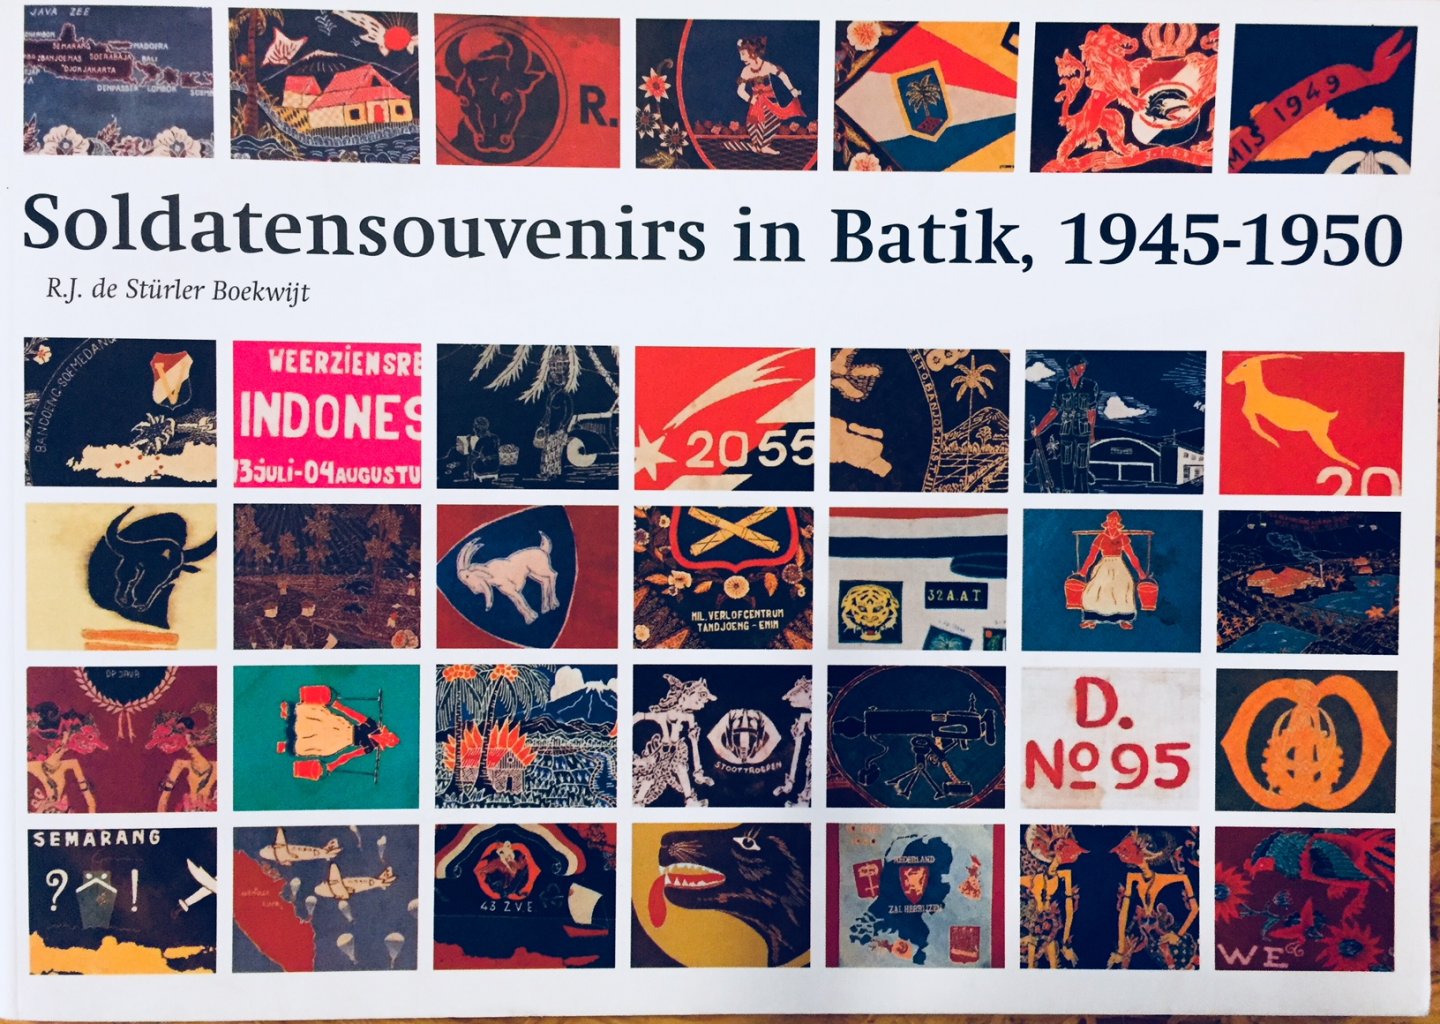 Stürler Boekwijt, R.J. de - Soldatensouvenirs in Batik, 1945-1950 / Soldier's souvenirs in Batik, 1945-1950.